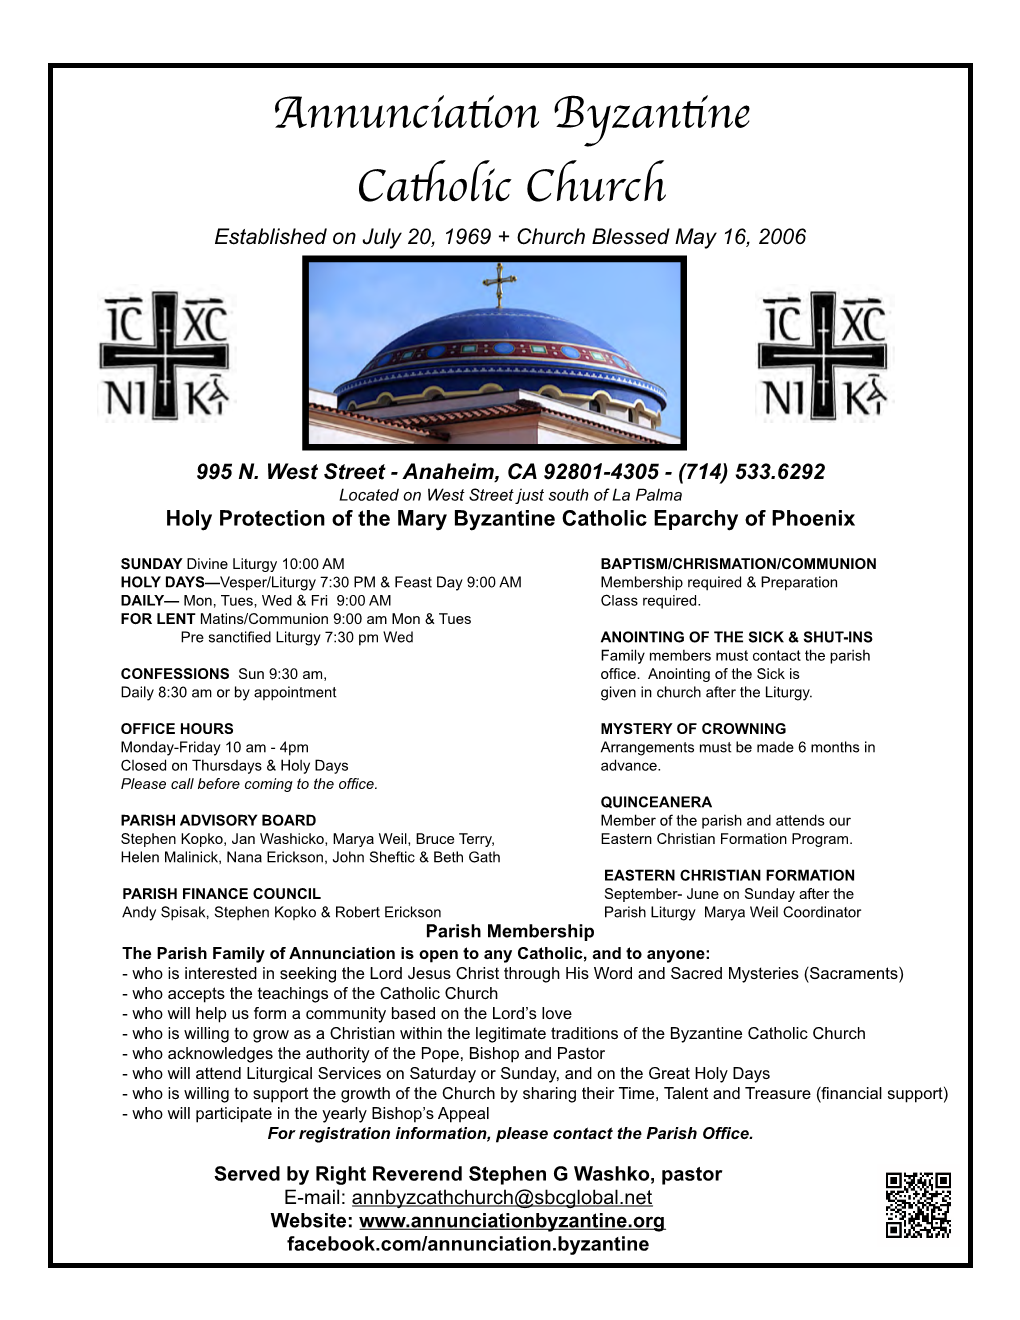 Annunciation Bulletin 3-12-17A Copy